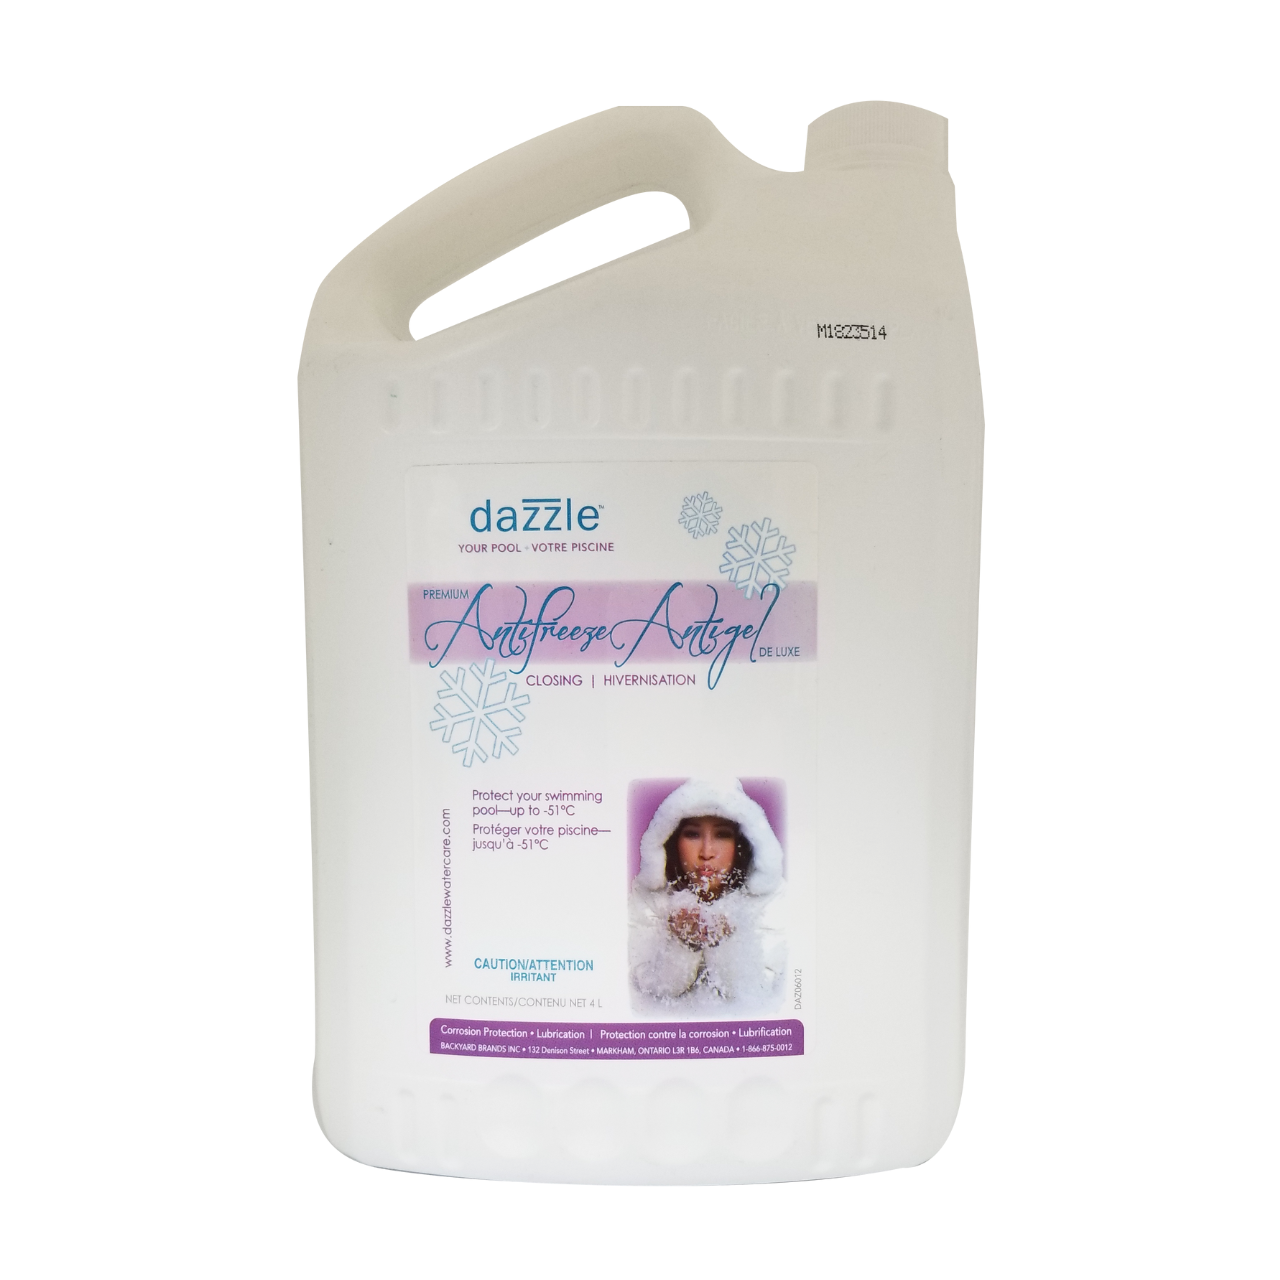 Dazzle™ Premium Antifreeze (propylene glycol)